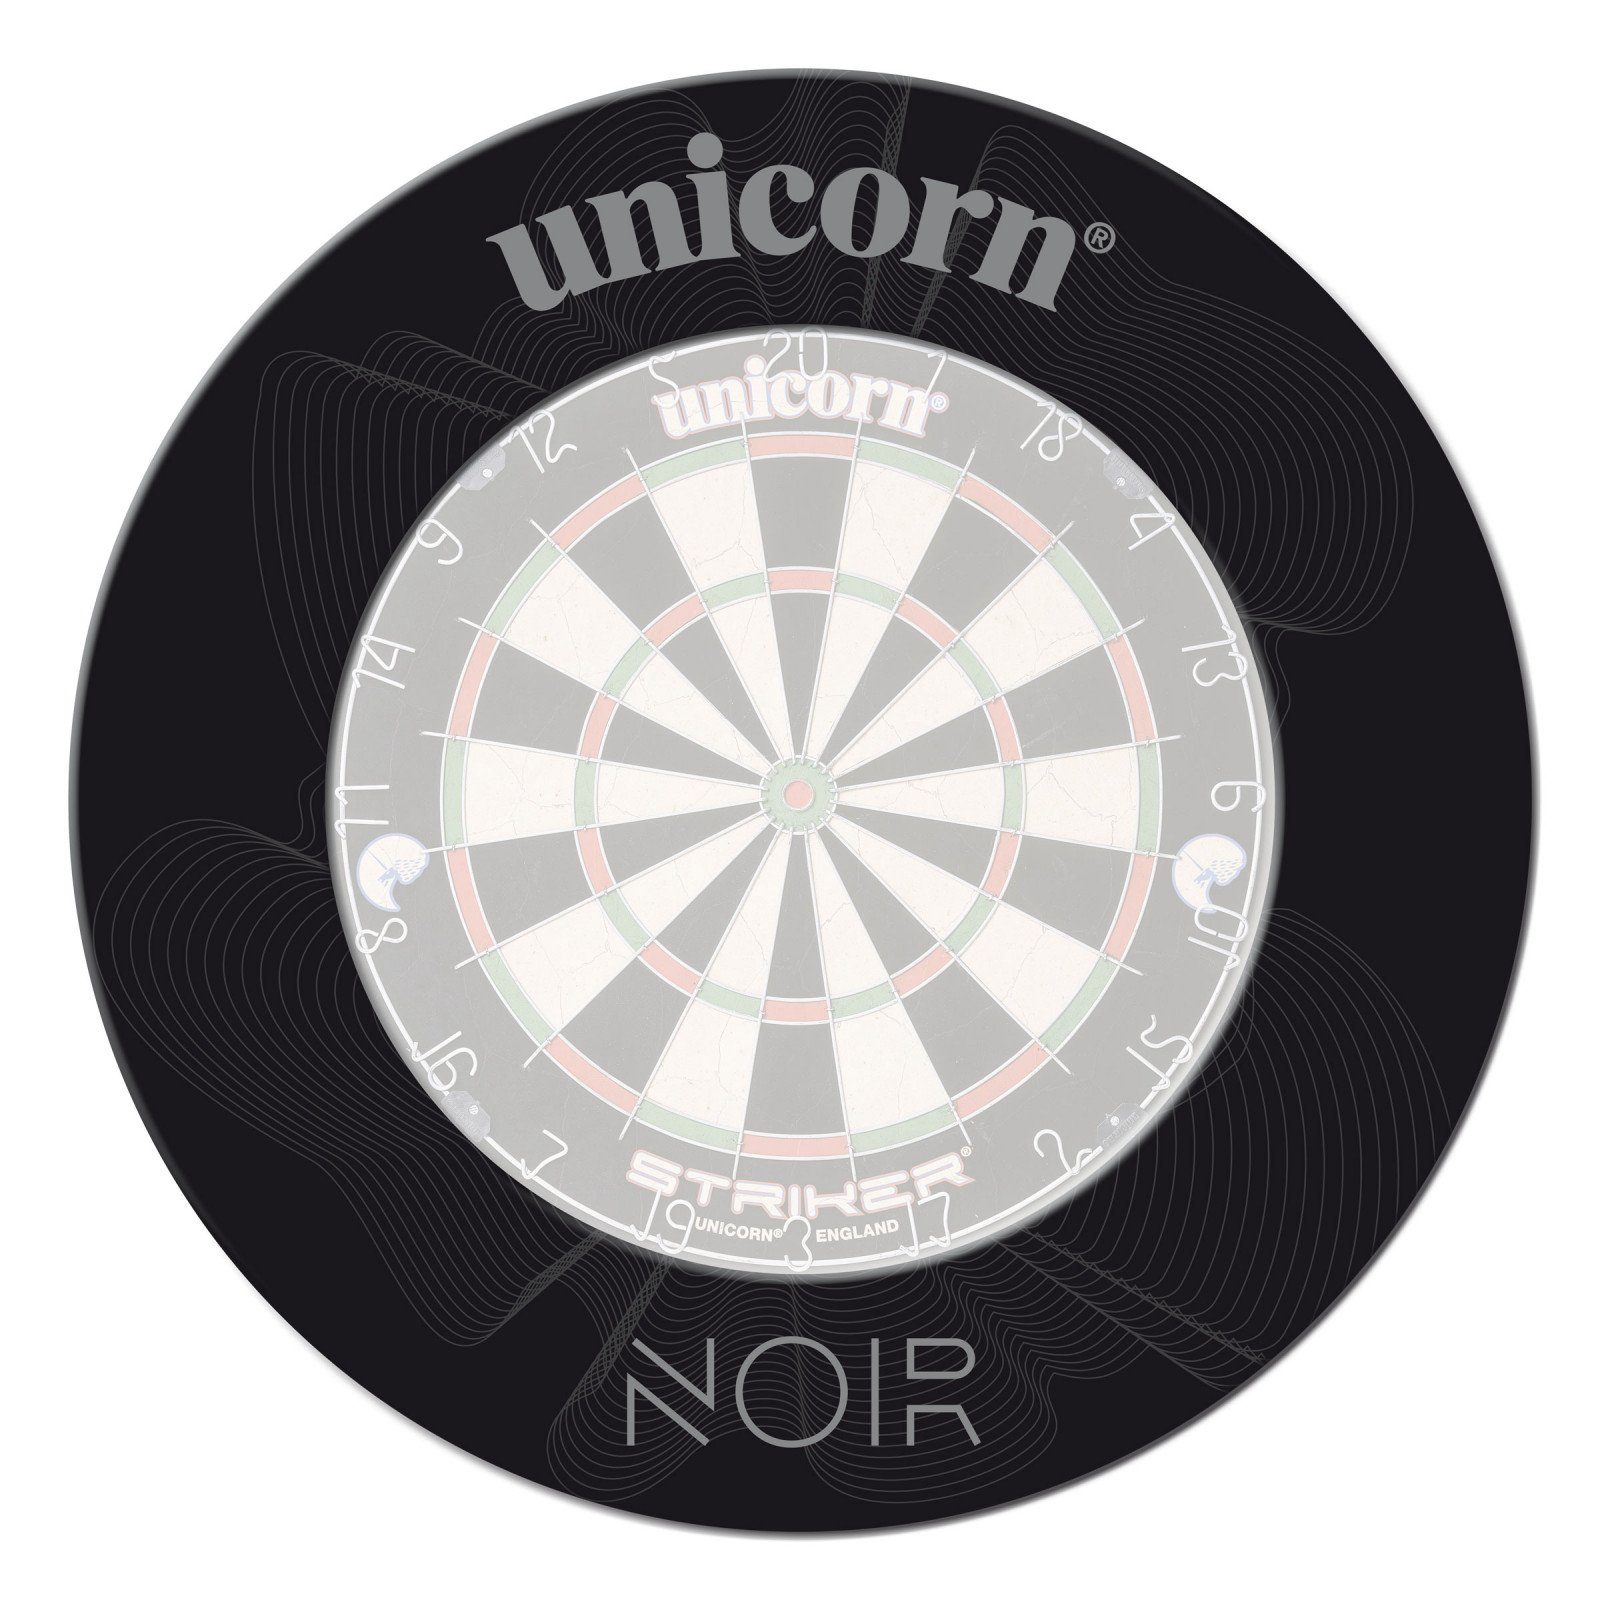 unicorn Dart-Wandschutz Professional Dartboard Surround - Noir schwarz